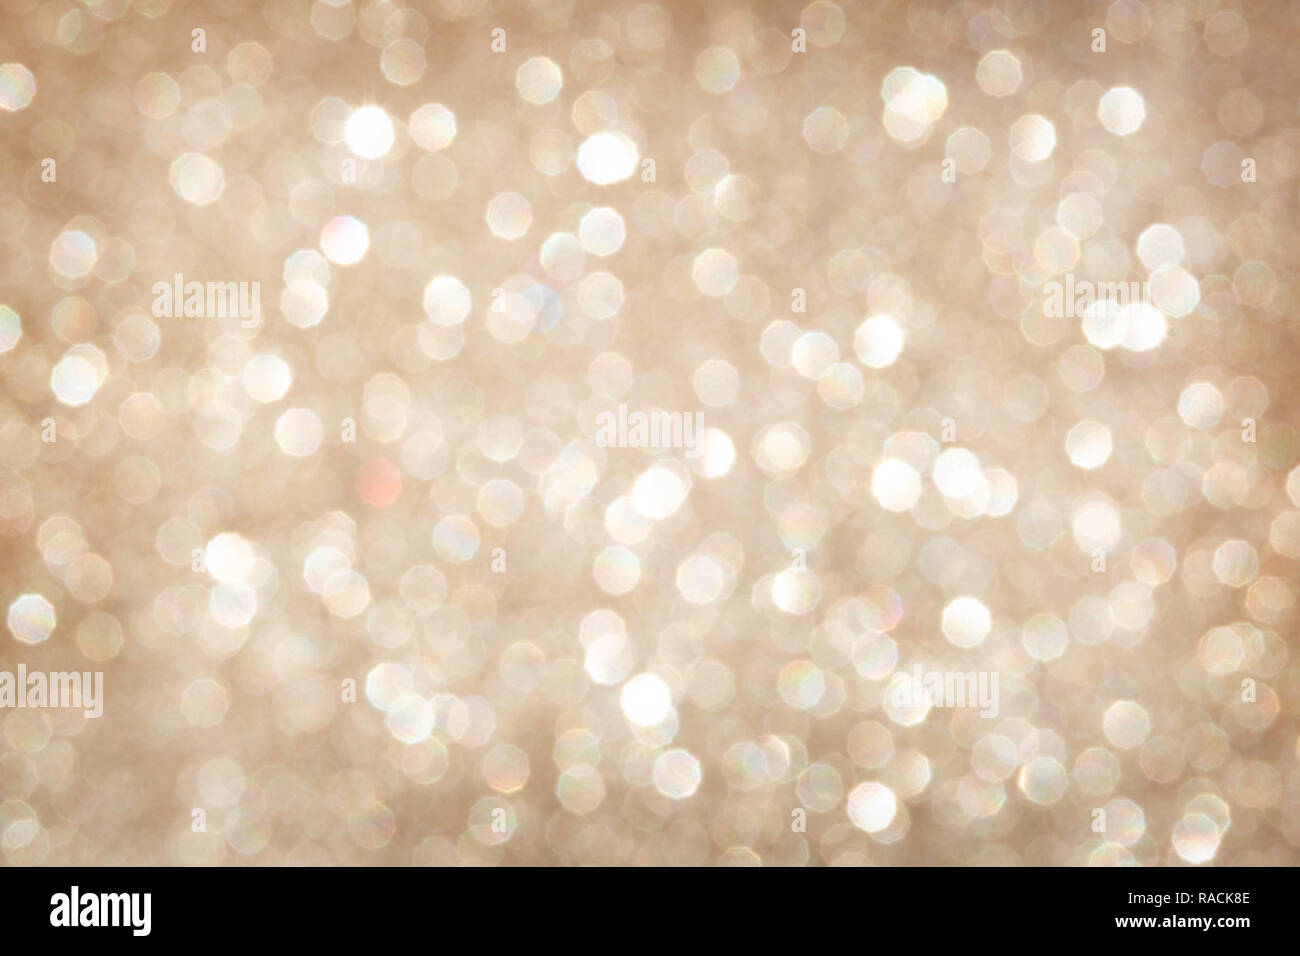 Gold glitter blurred background, christmas Stock Photo